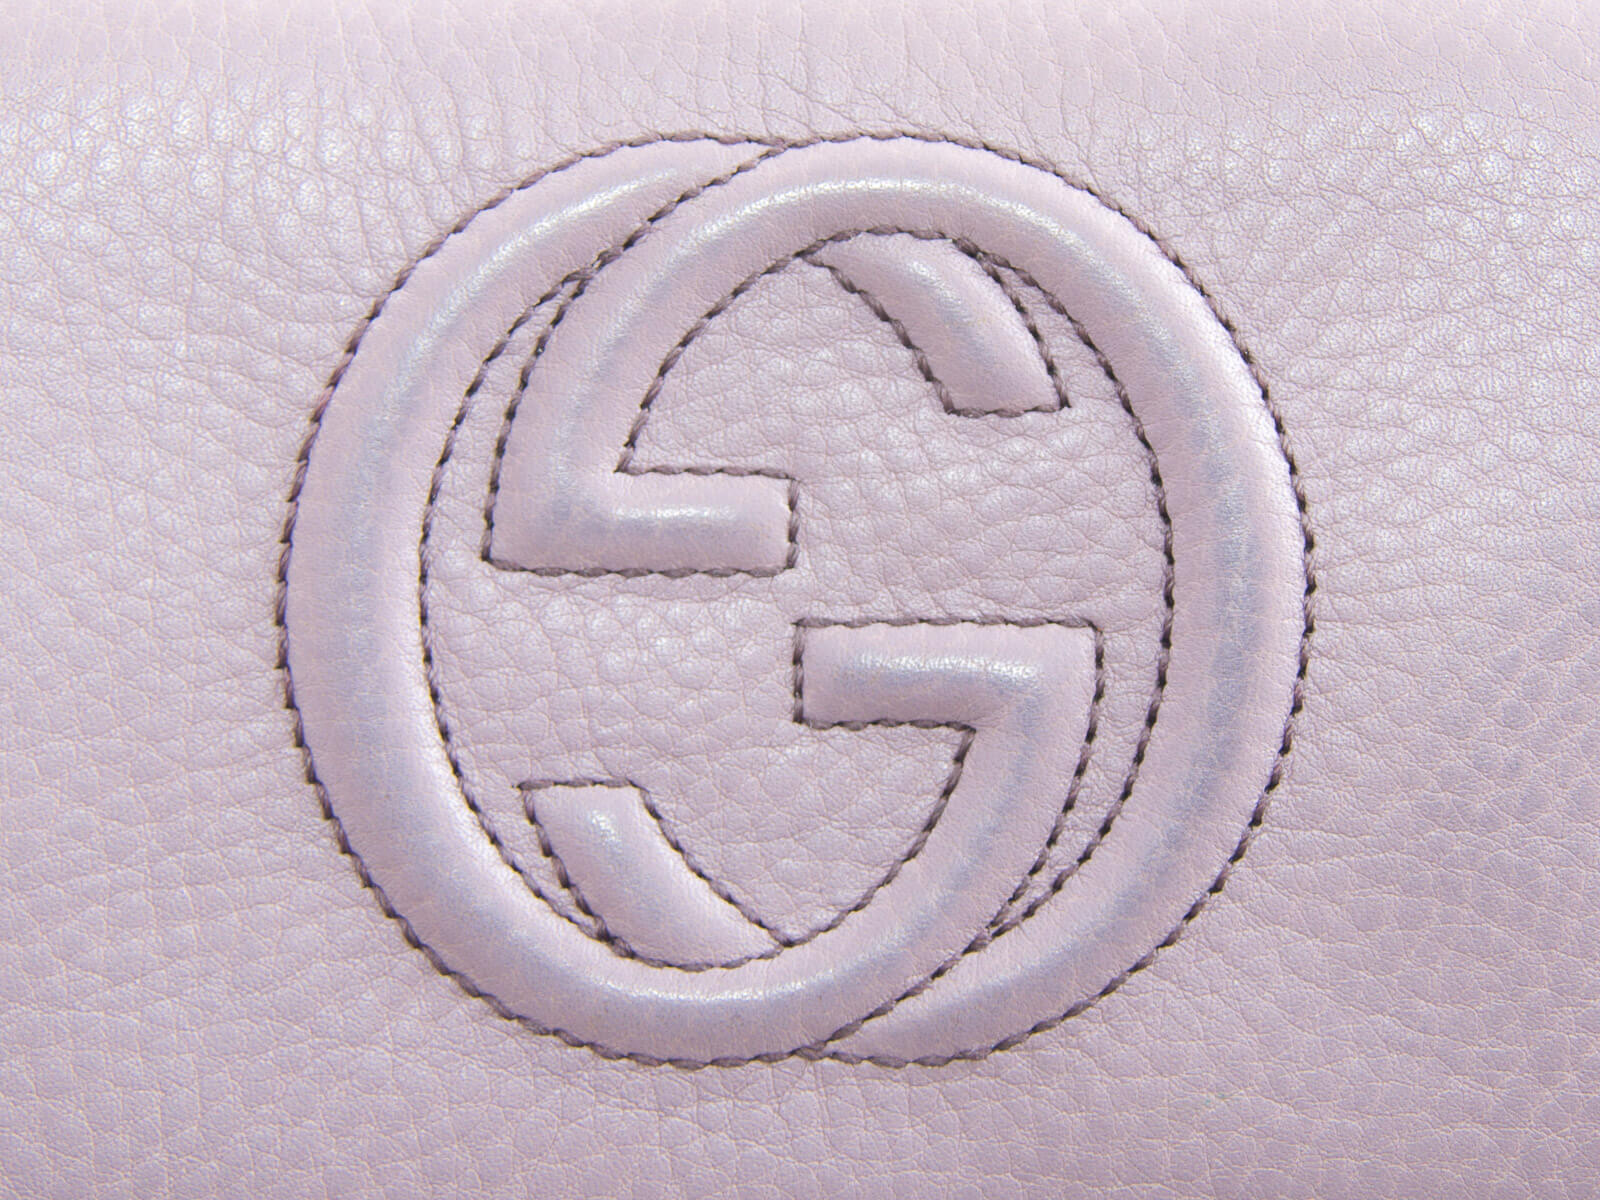 authentic gucci logo